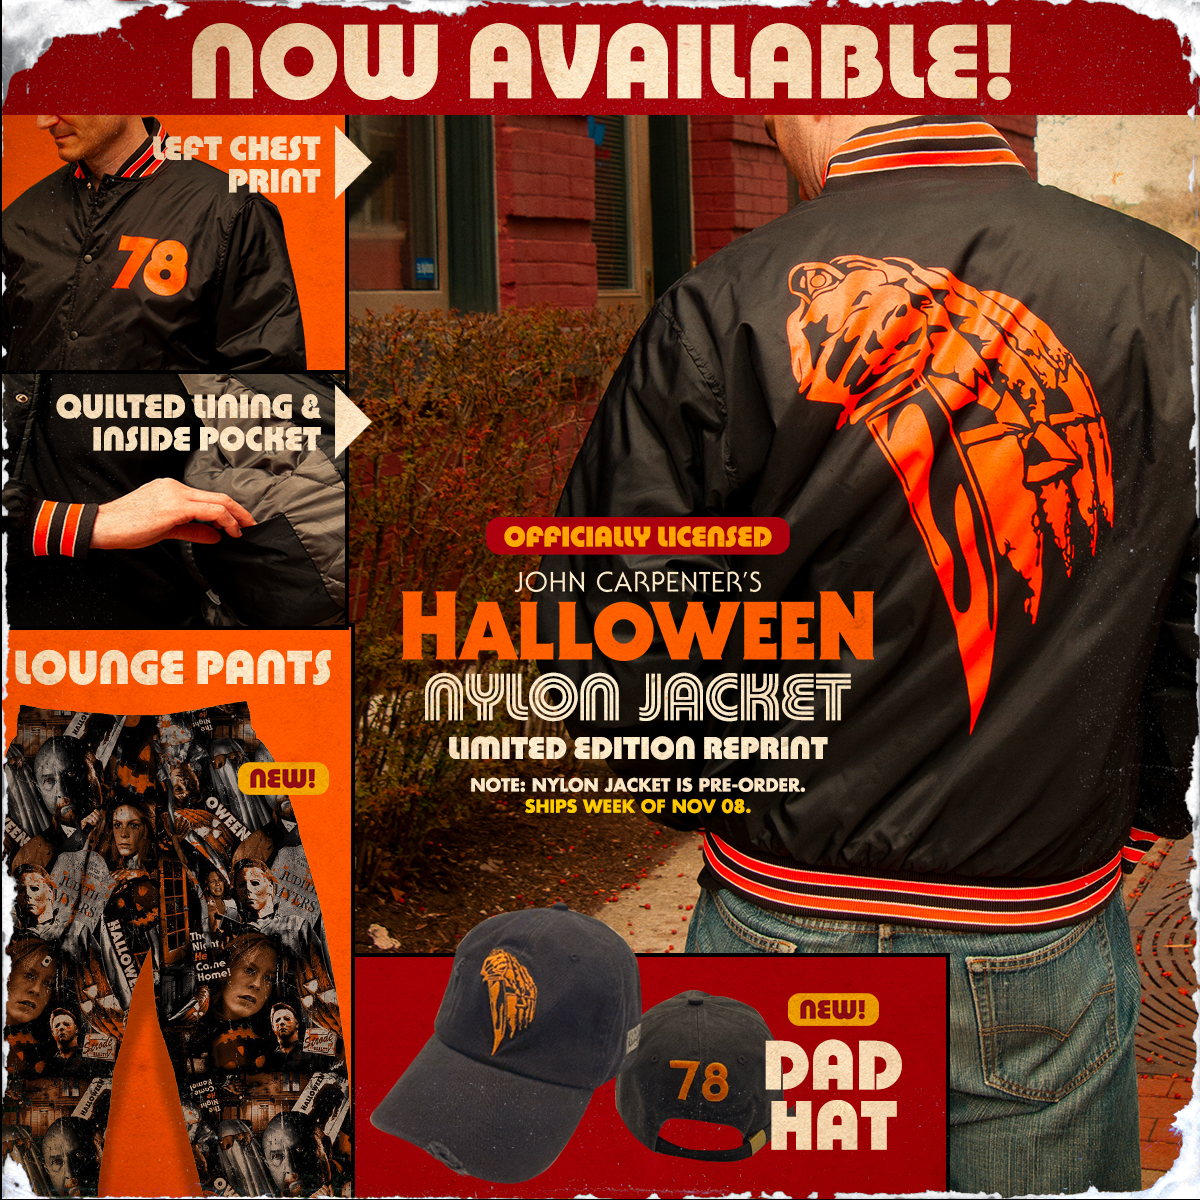 Get Spooky With Halloween, Universal Monsters, Joe Bob Briggs Apparel